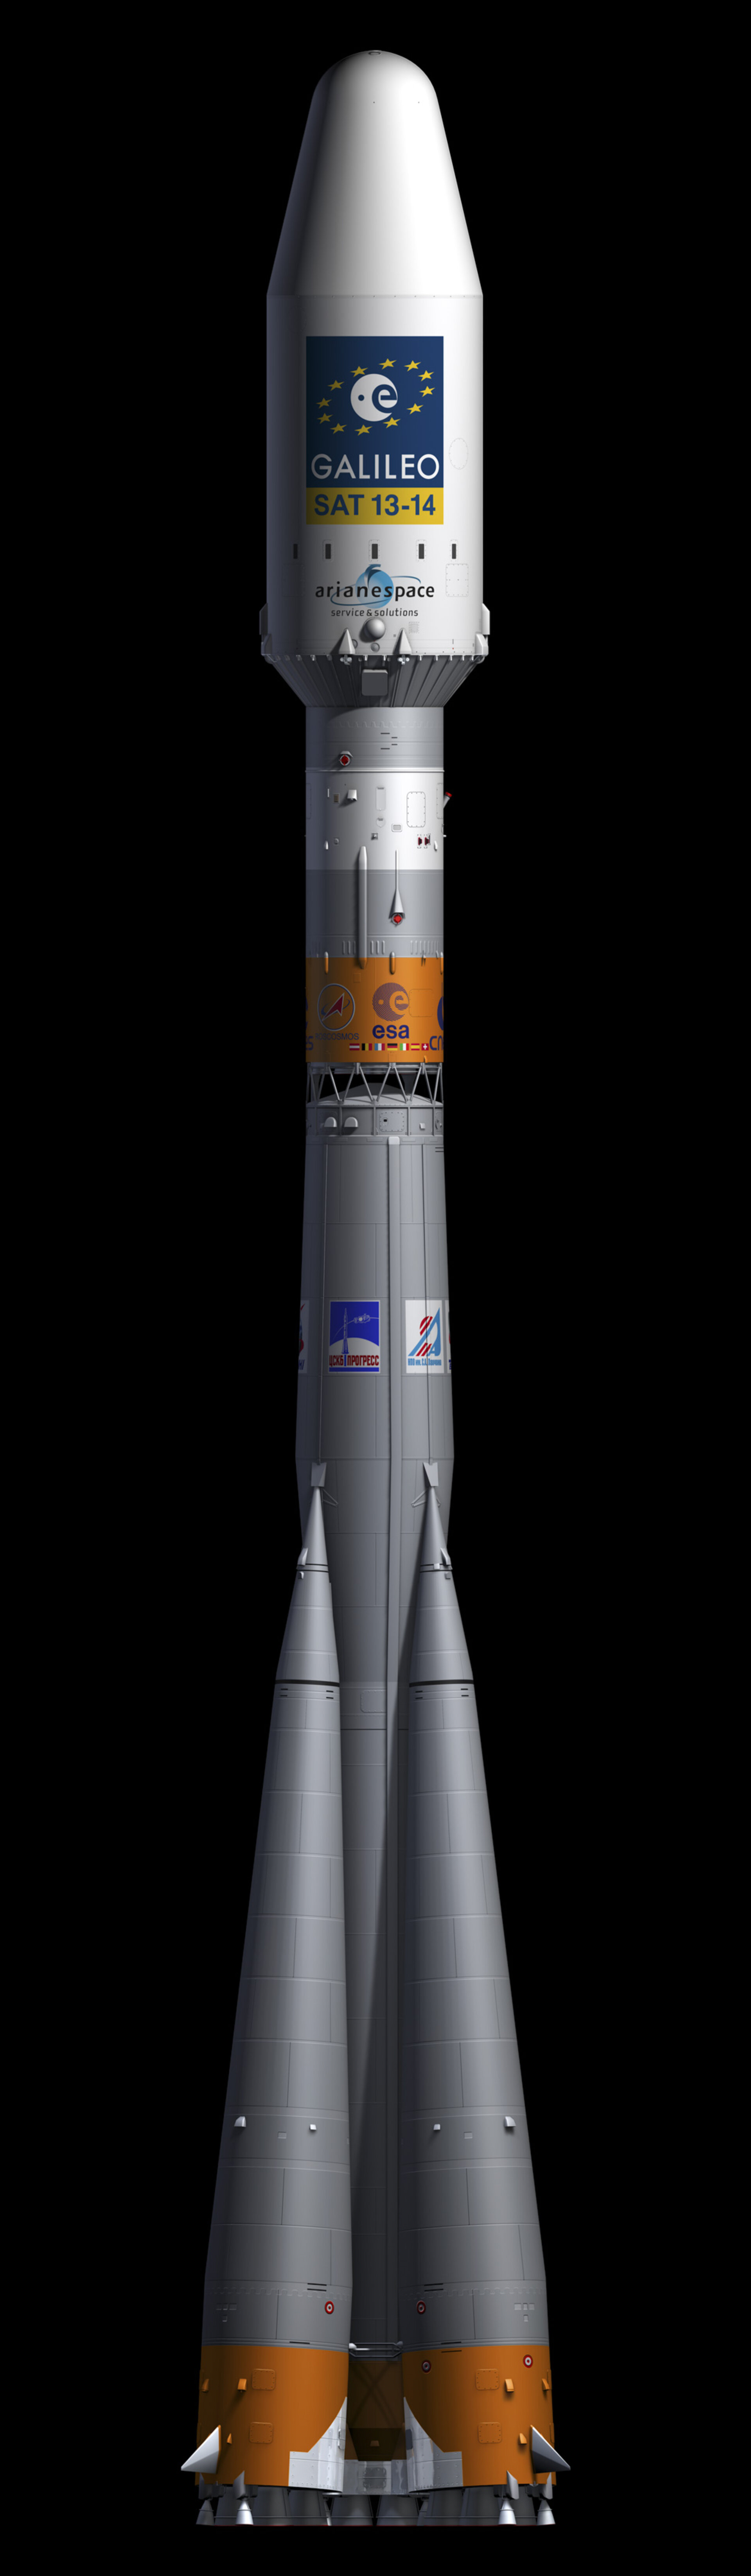 Soyuz rocket fairing carrying Galileo 13 and 14 satellites